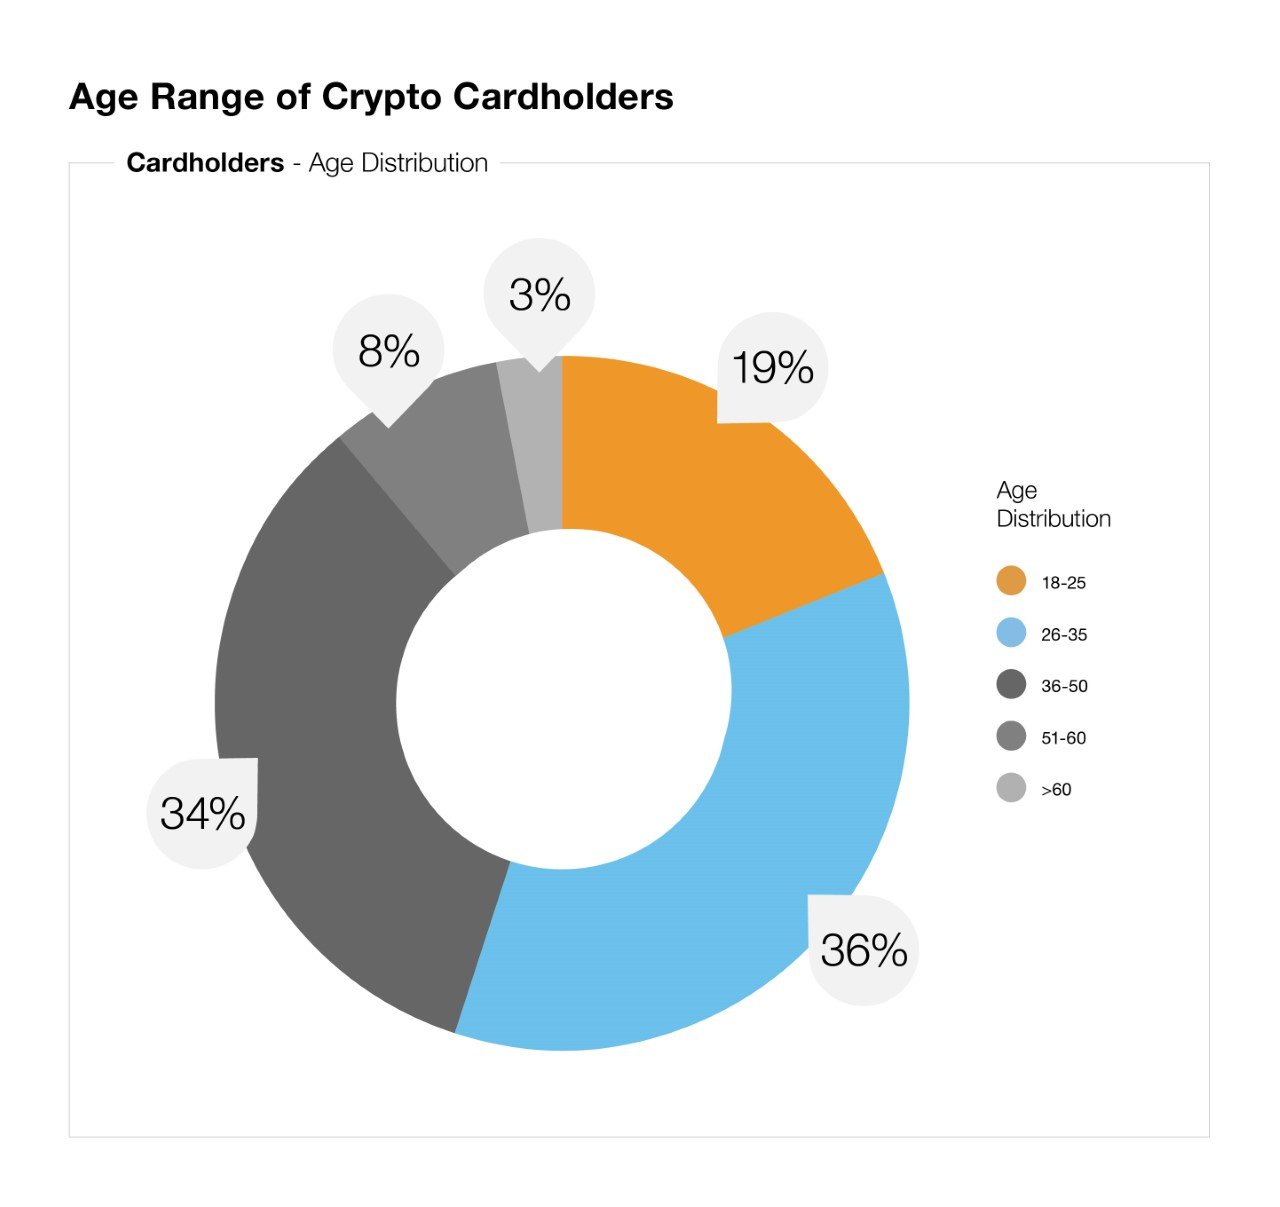 Age Range of crypto cardholders